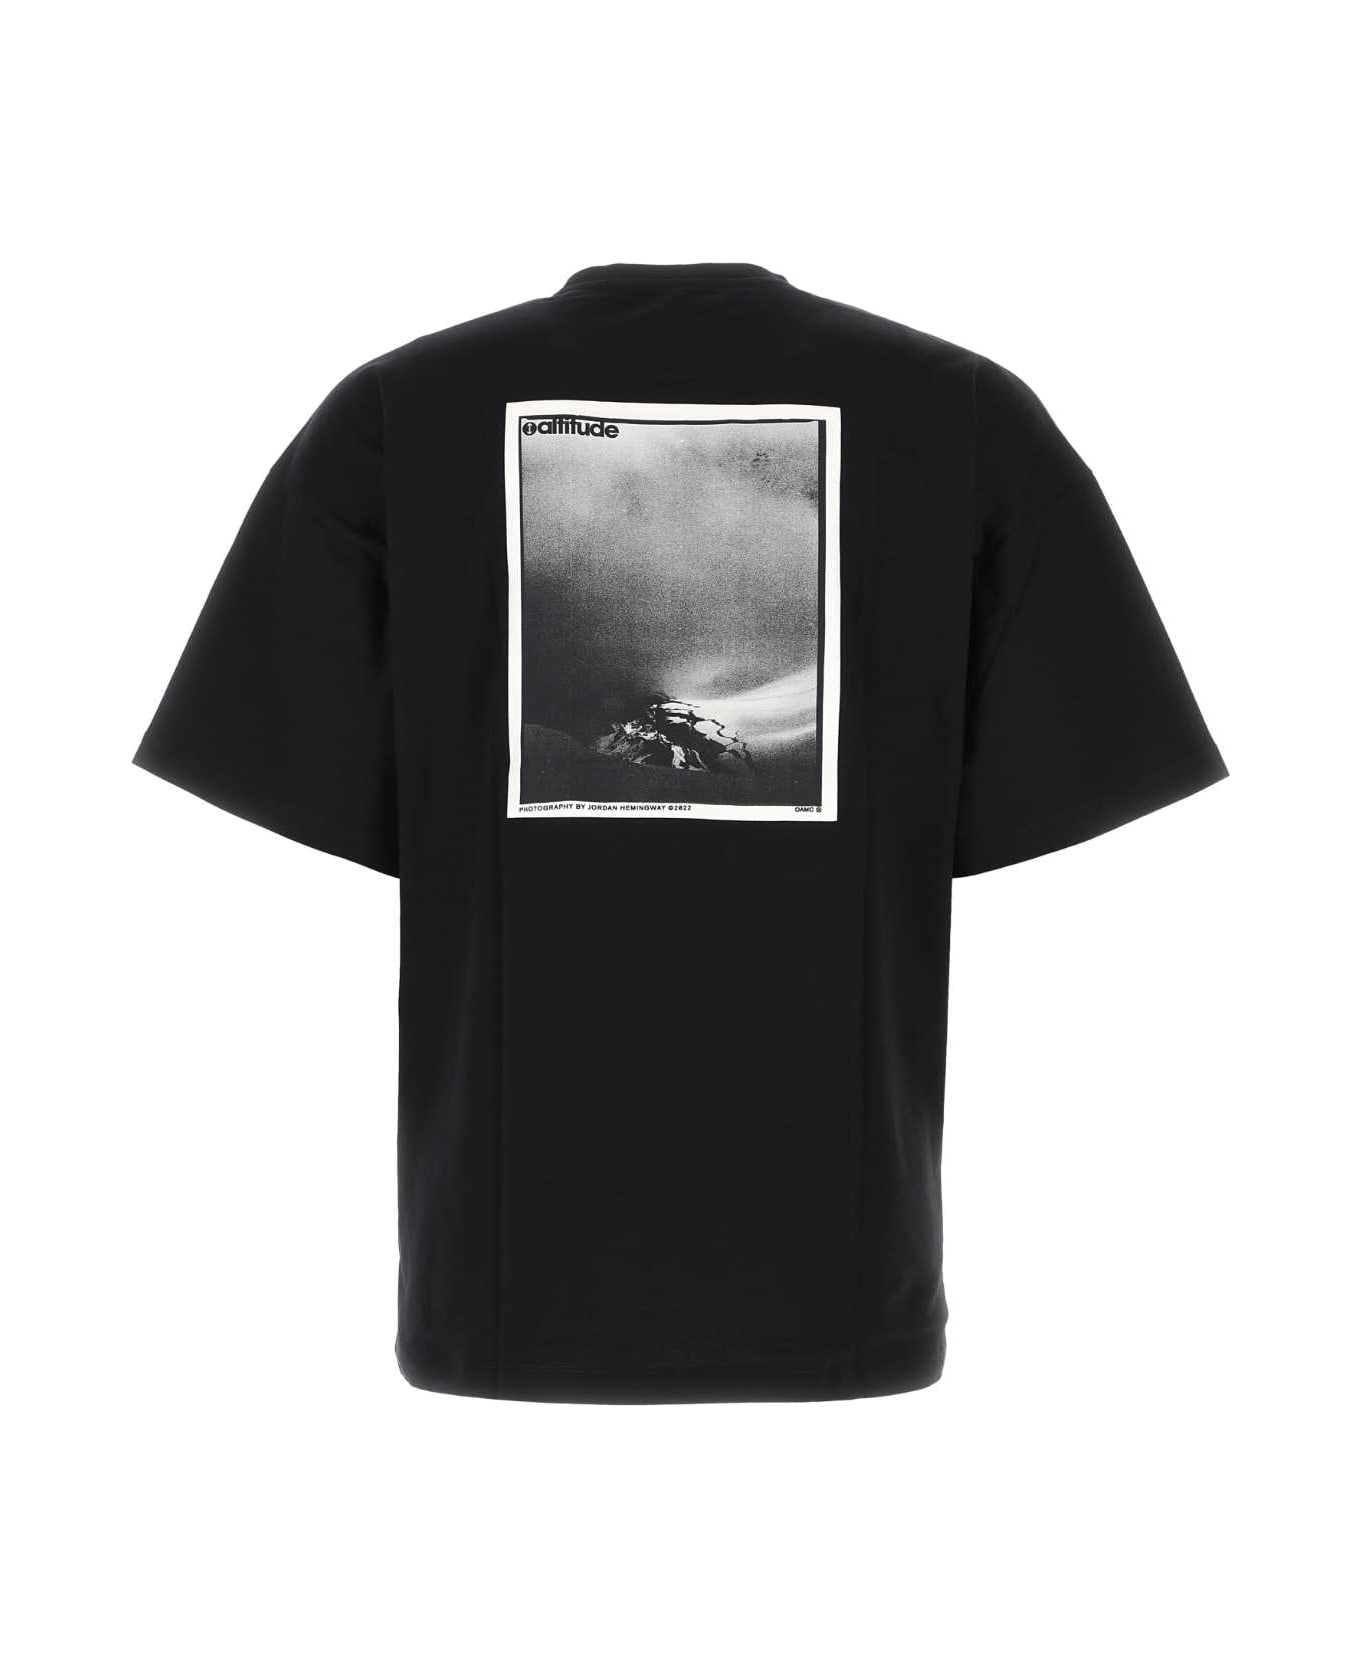 OAMC Black Cotton Oversize T-shirt - BLACK